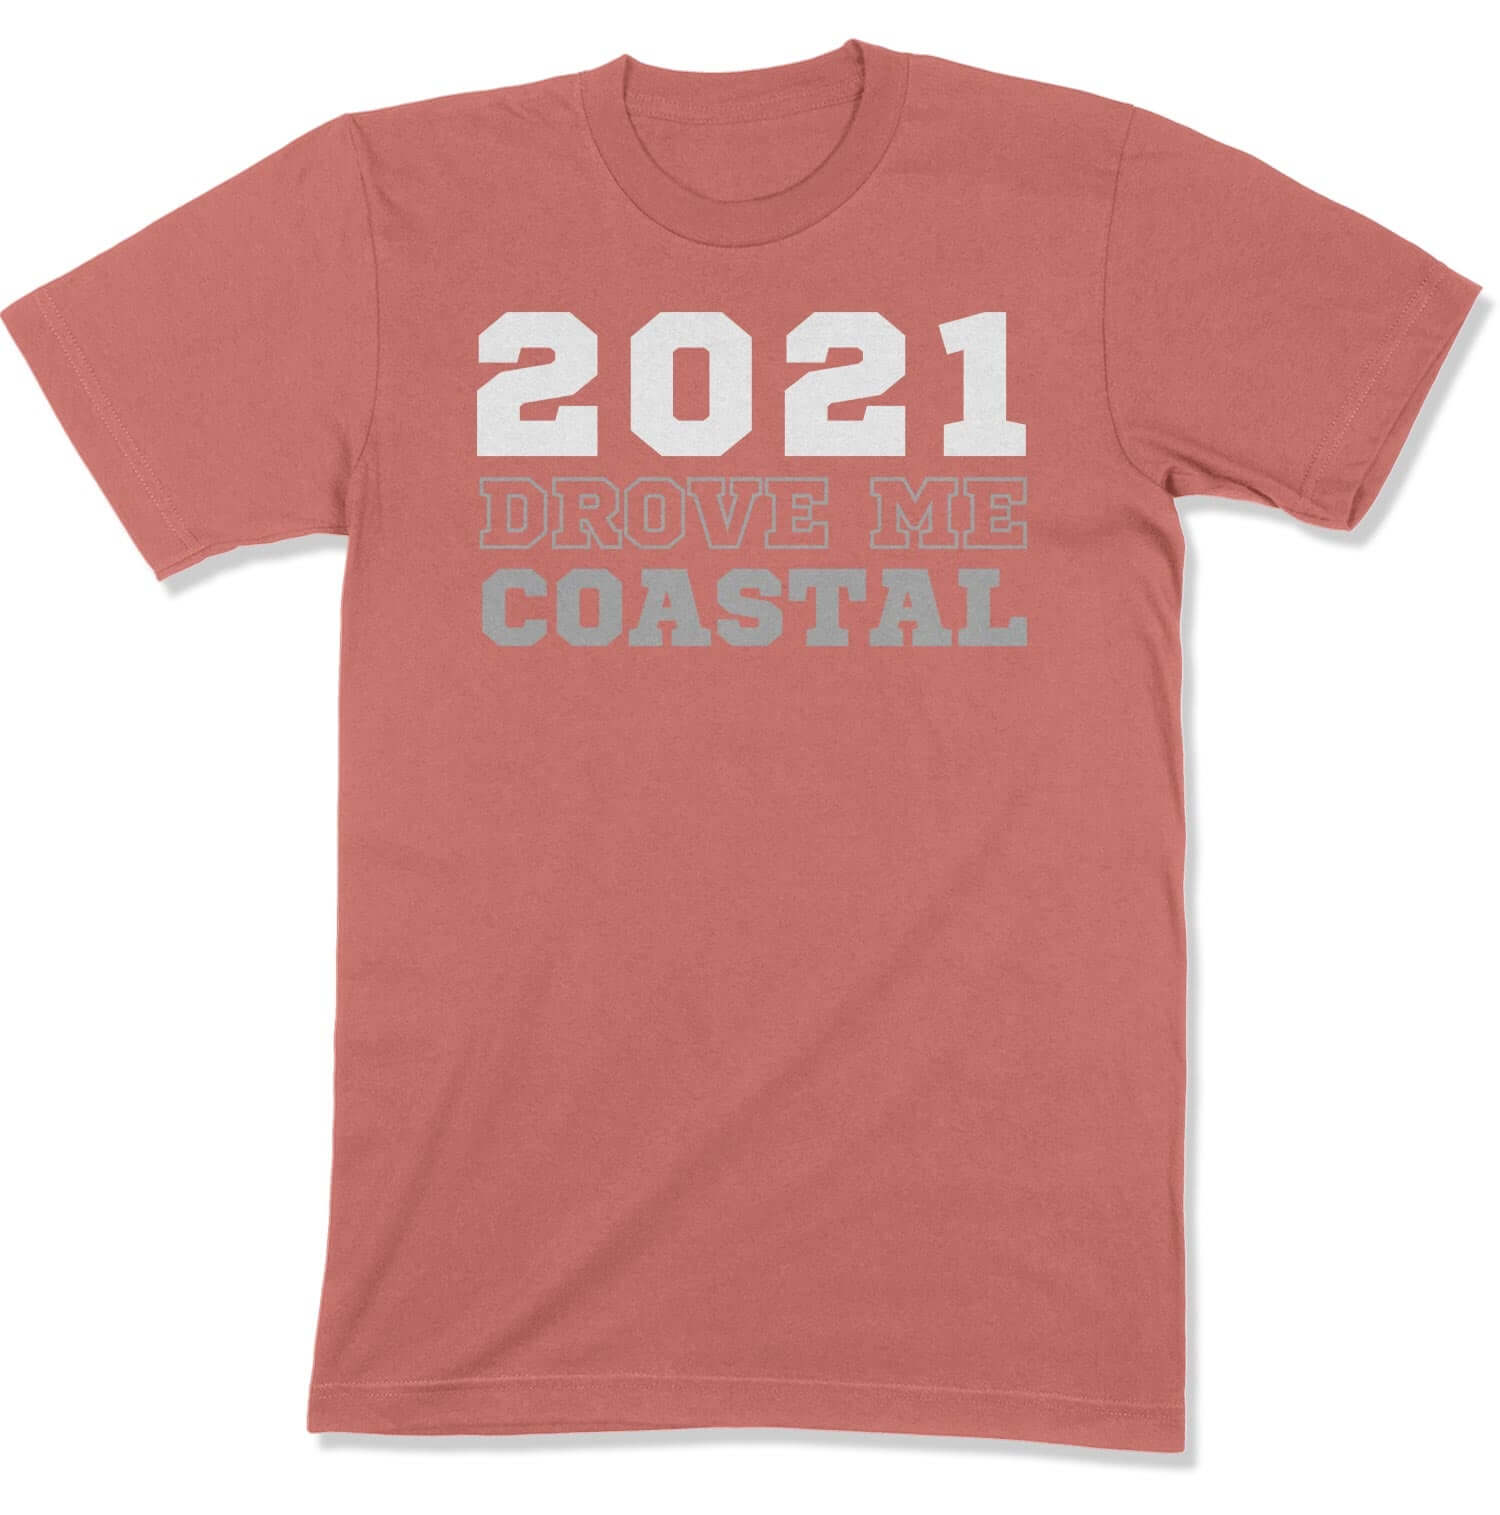 2021 Drove Me Coastal Unisex T-Shirt in Color: Mauve - East Coast AF Apparel